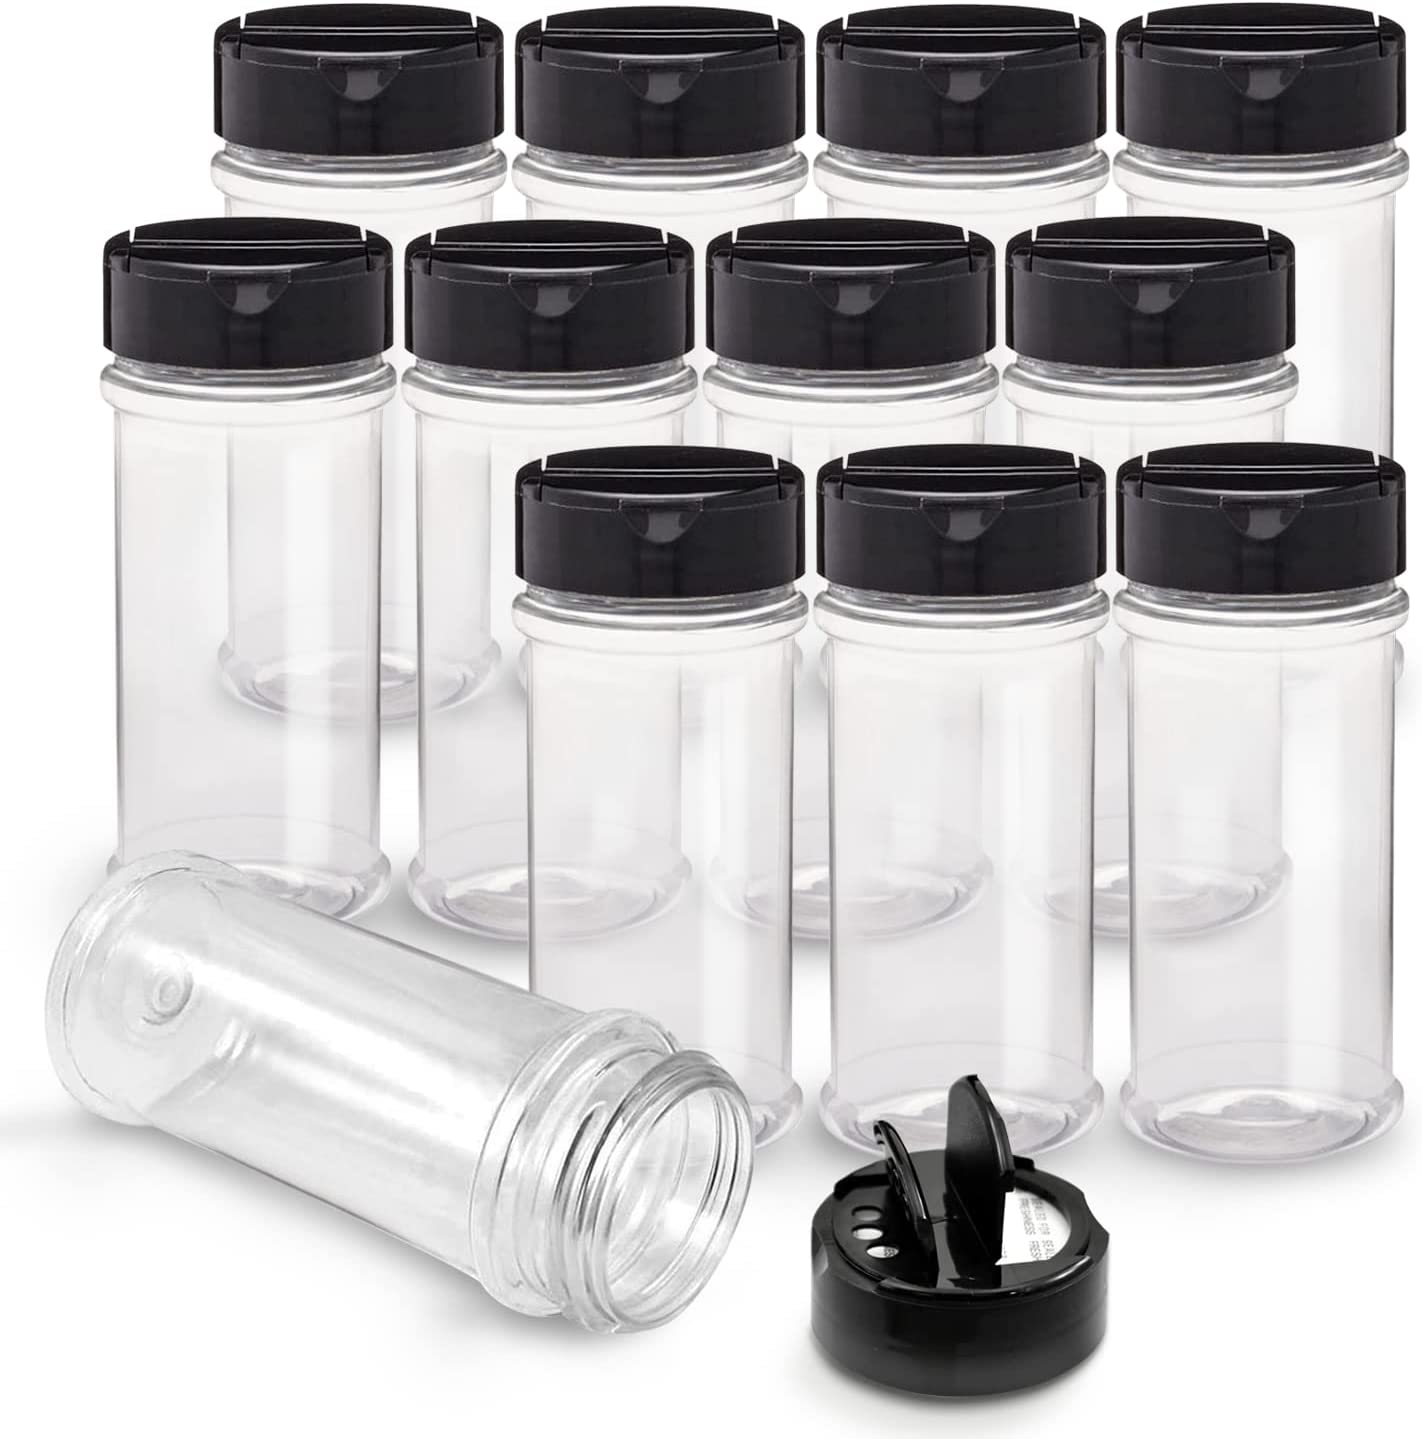 RoyalHouse BPA Free Plastic Spice Jars, 12-Pack